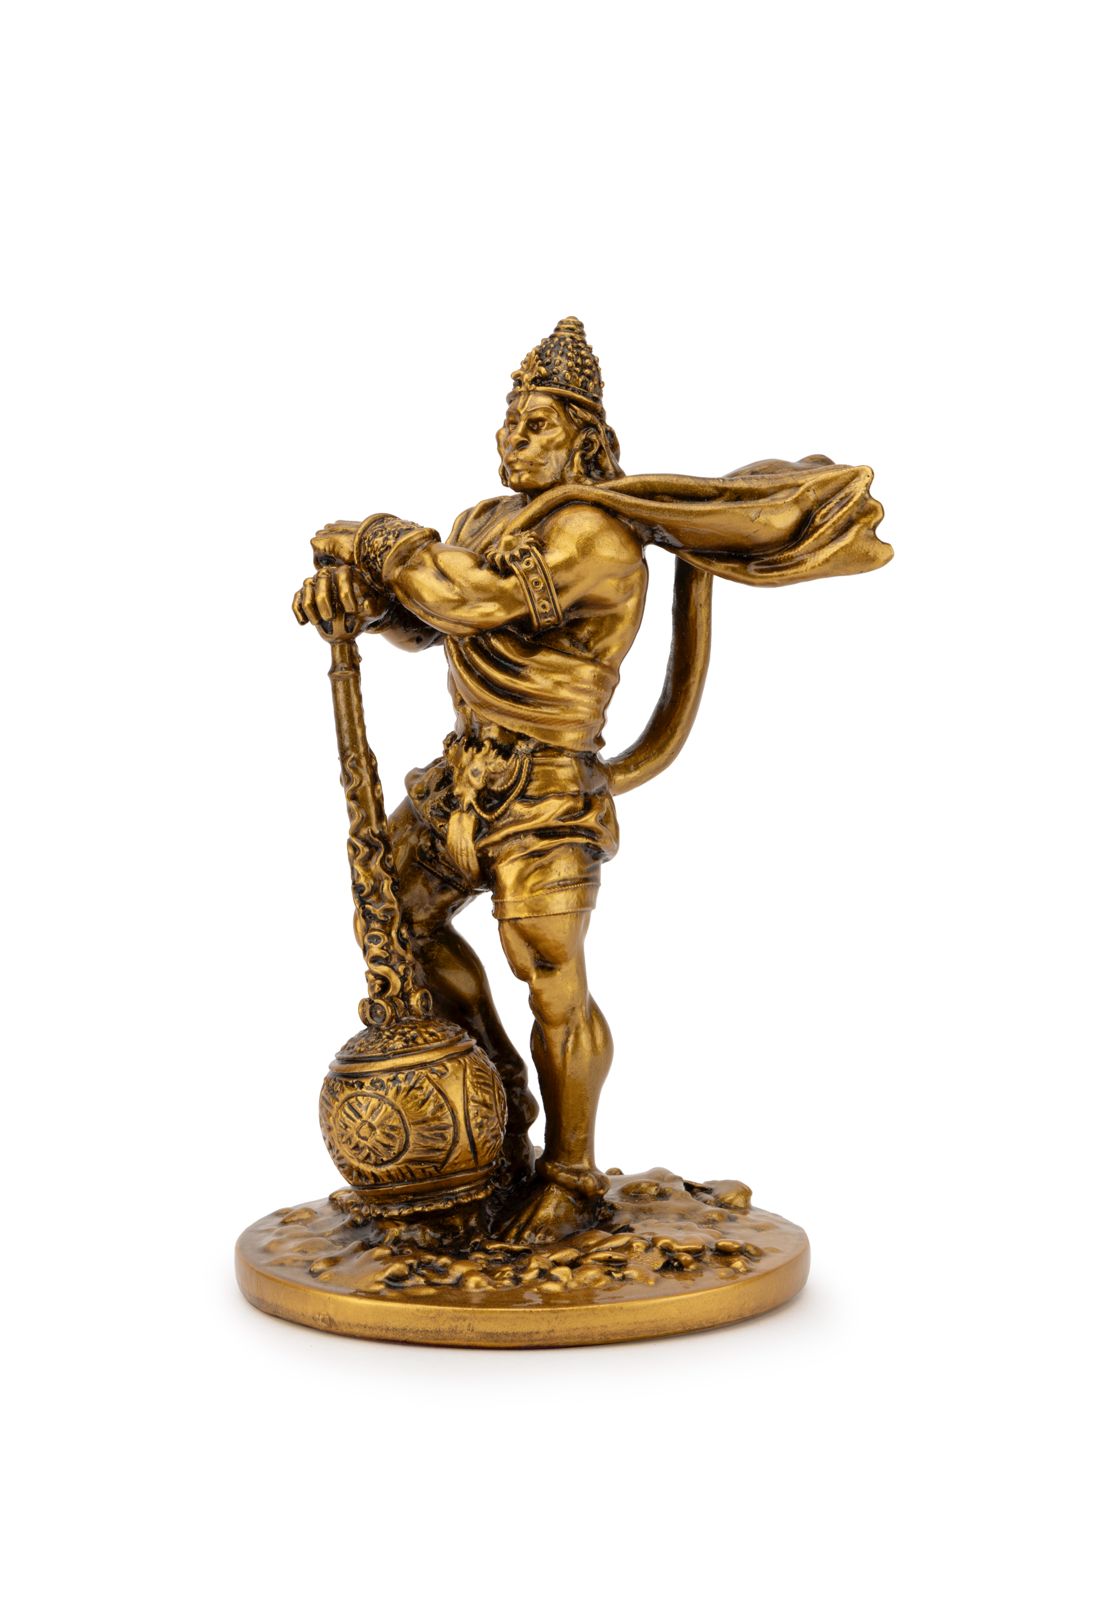 Hanuman Ji - Gives Power & Confidence